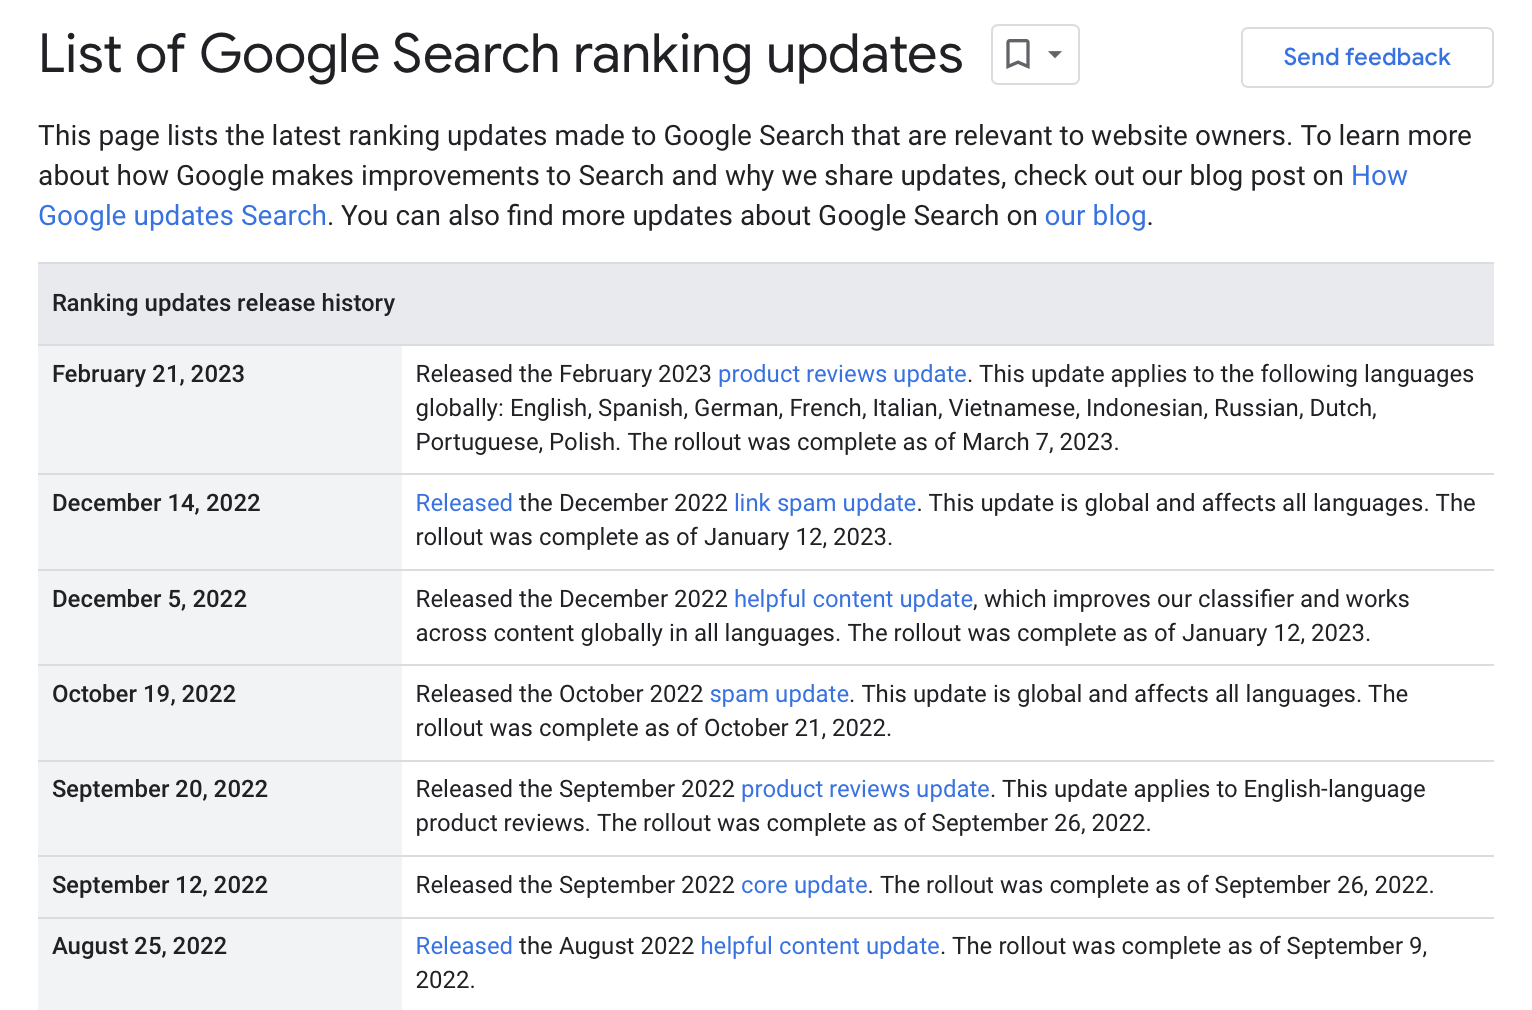 Google search ranking updates